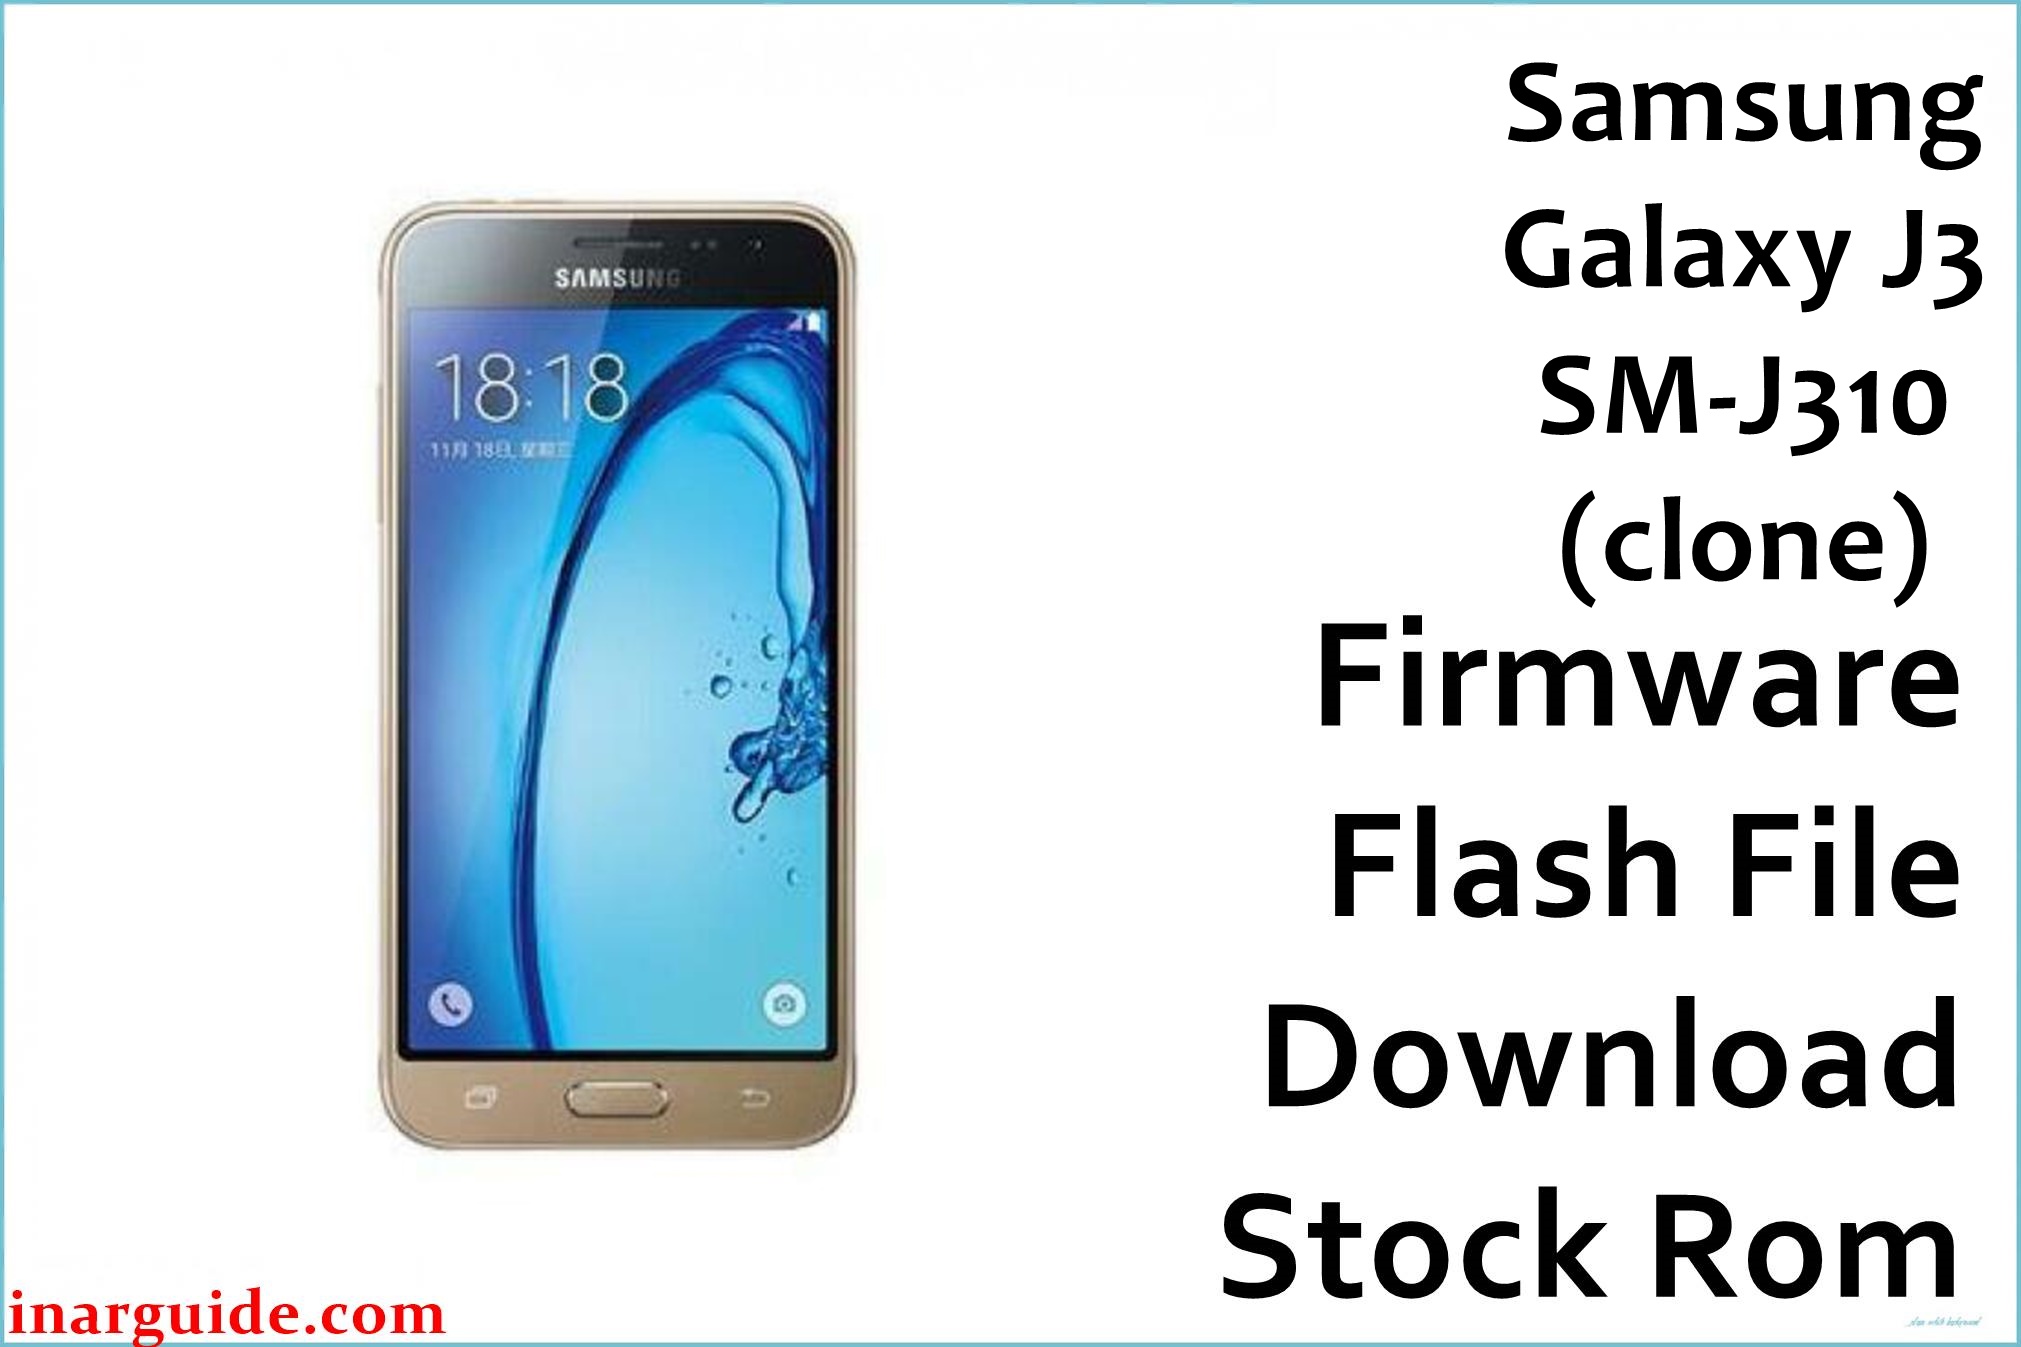 Samsung Galaxy J3 SM J310 clone